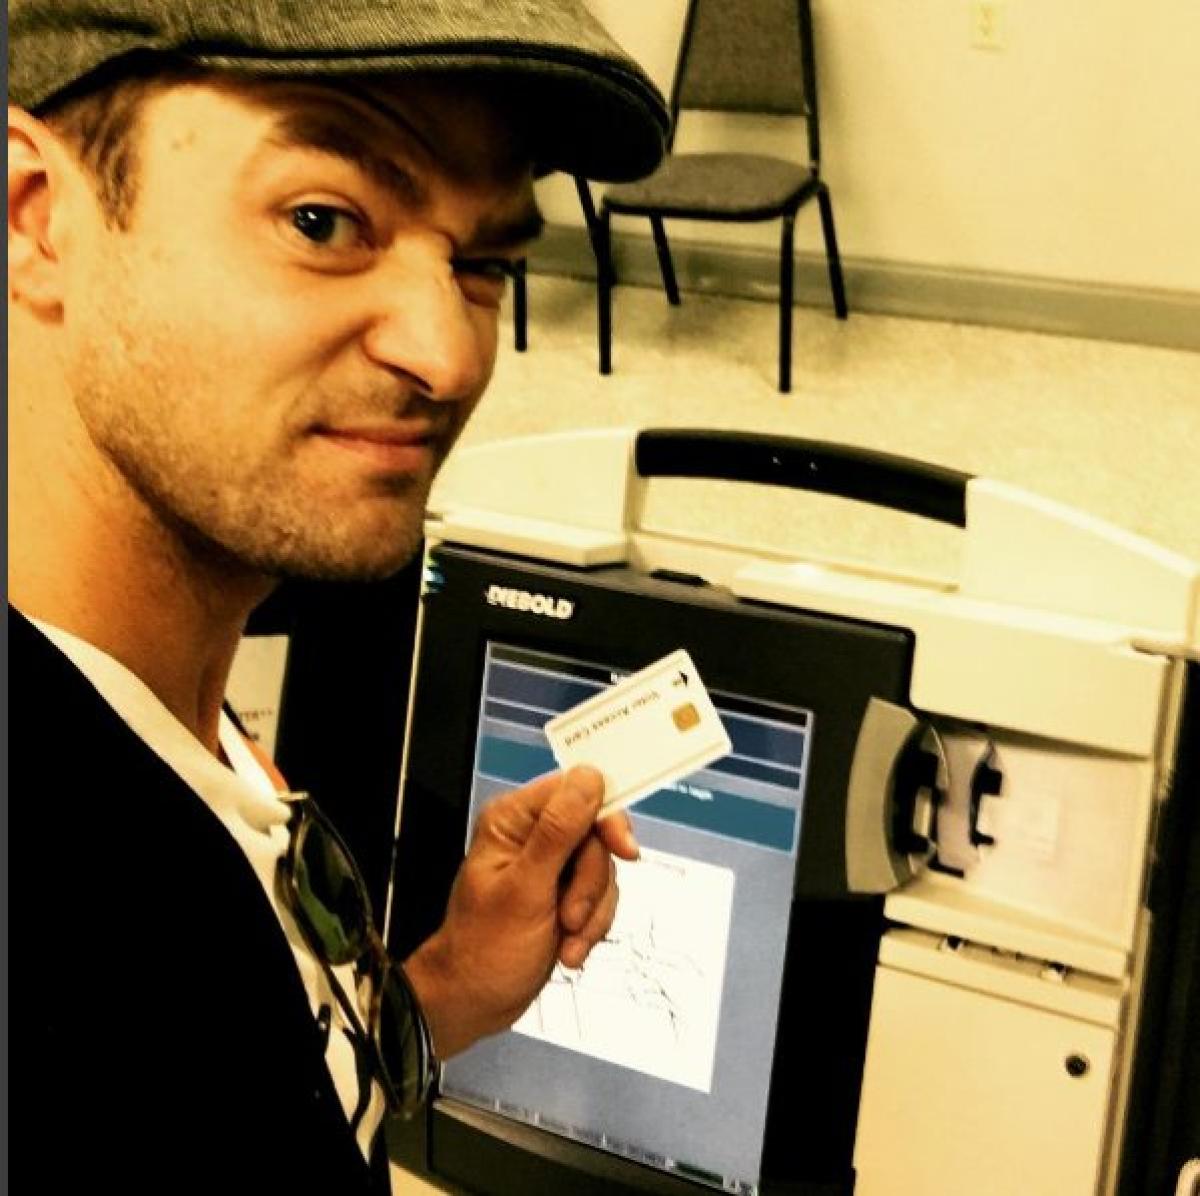 Timberlake's Instagram post.